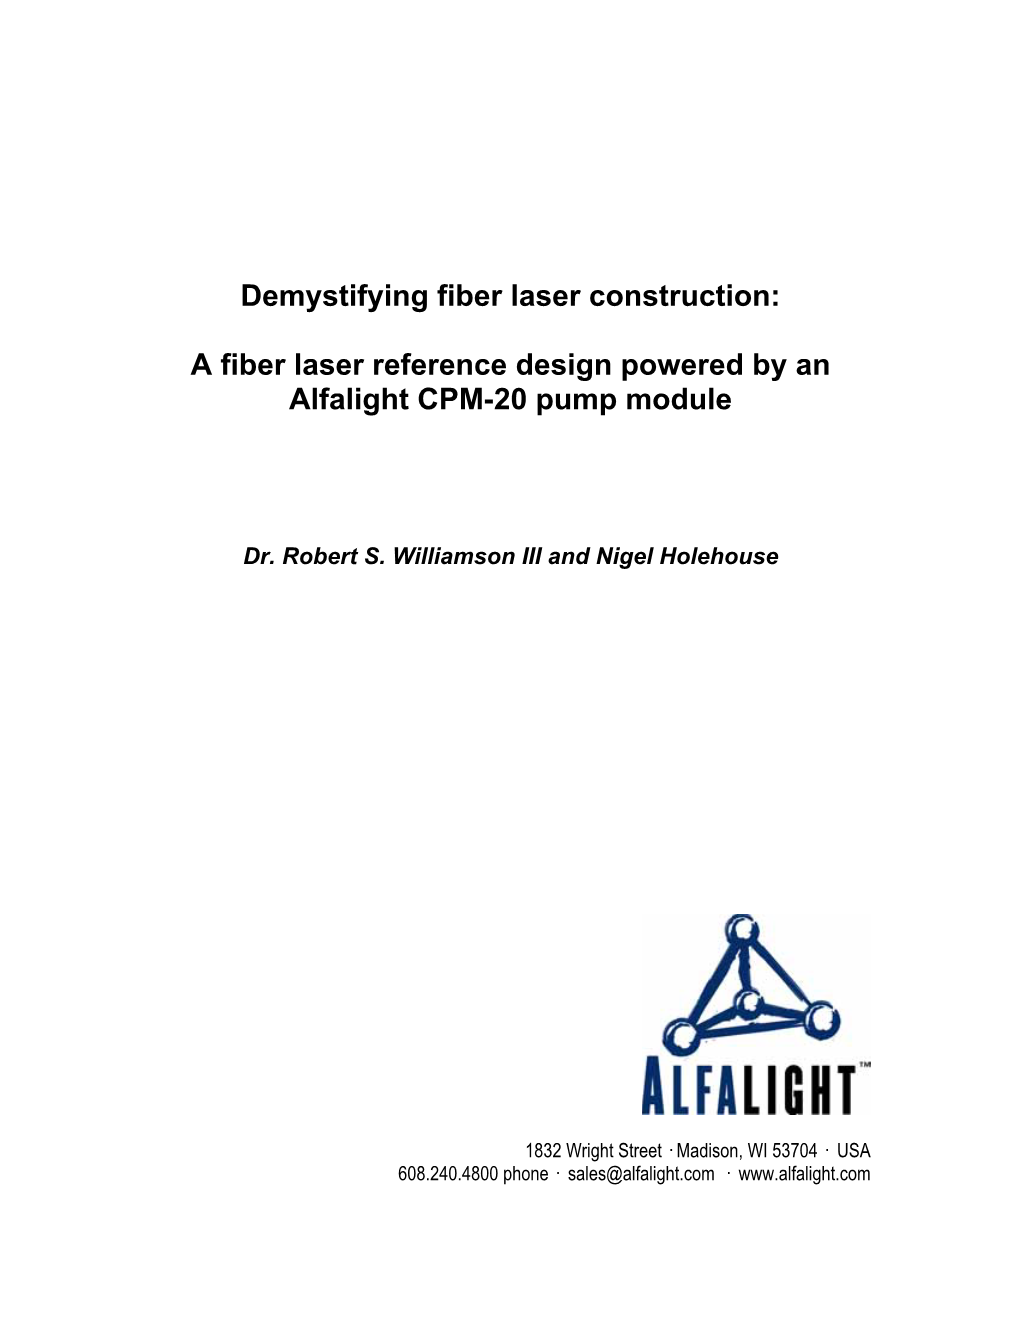 Demystifying Fiber Laser Construction